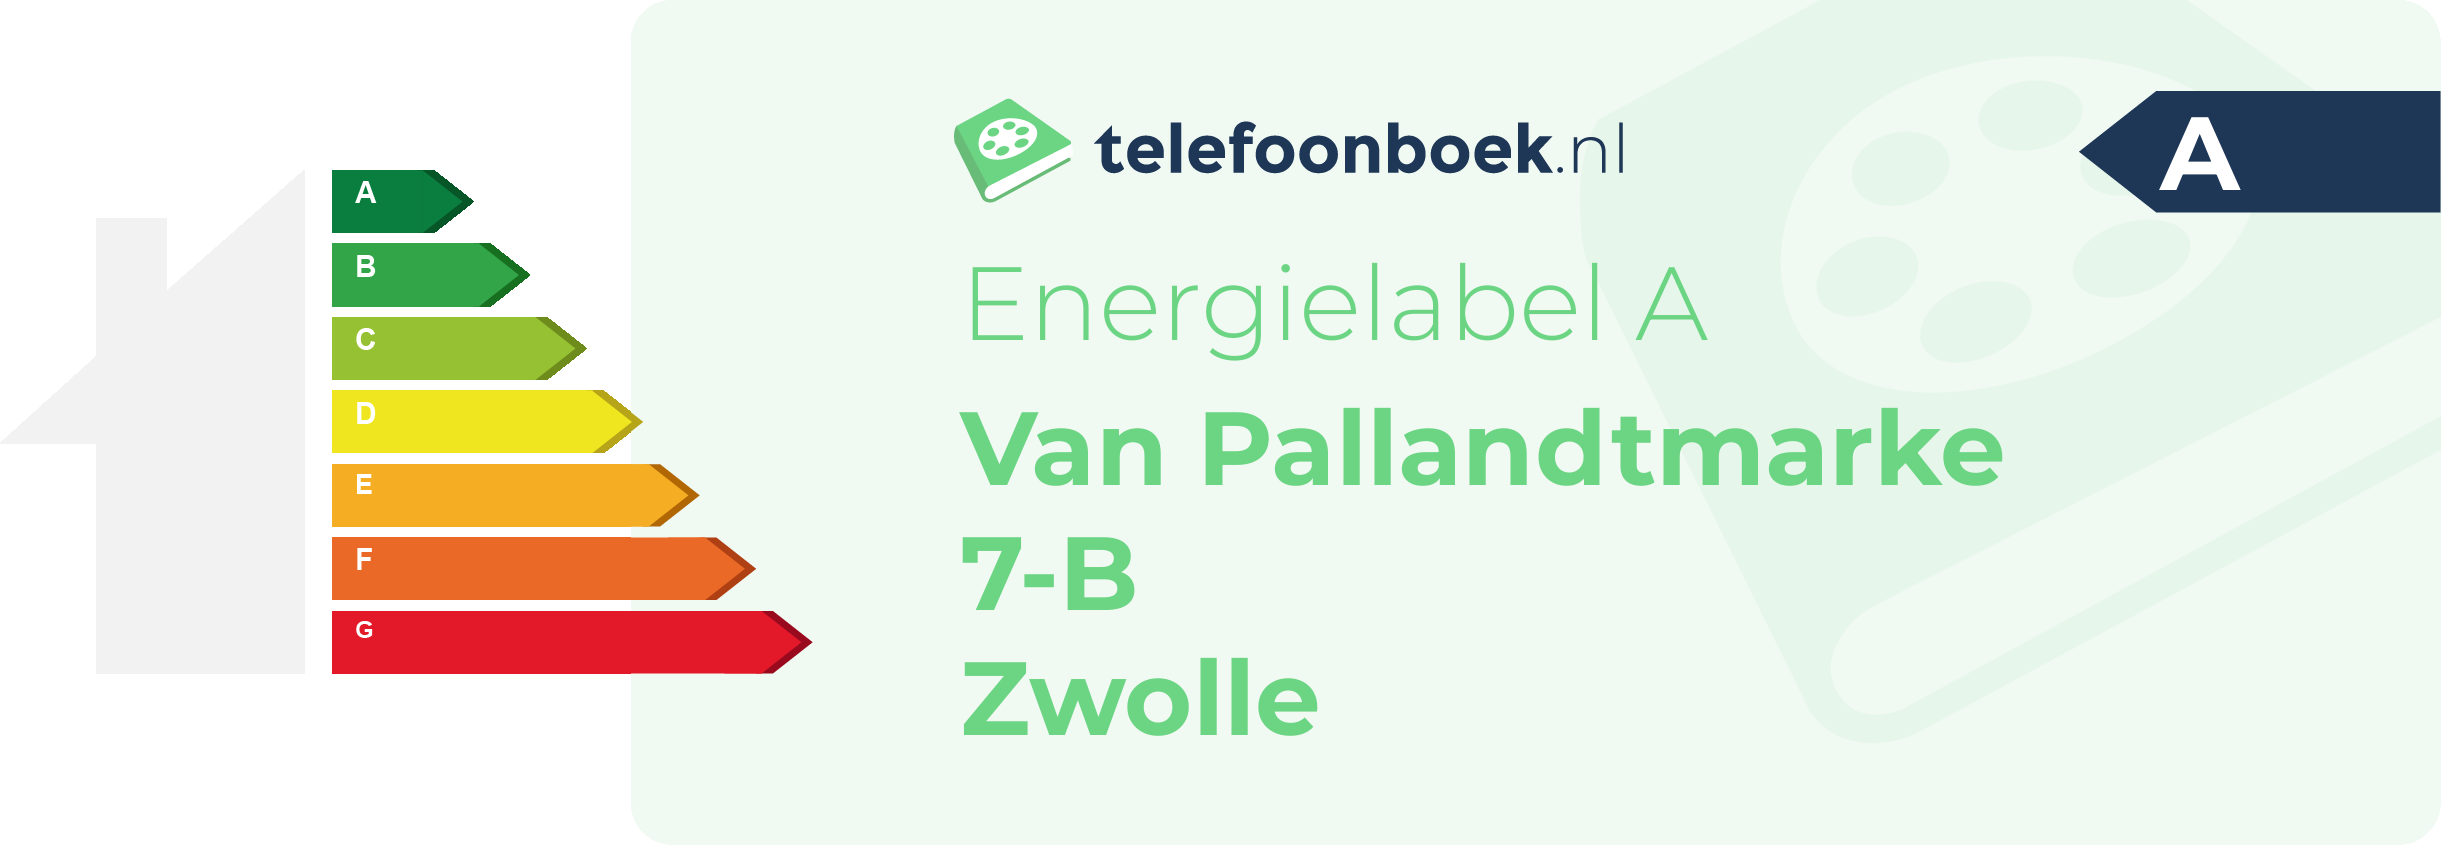 Energielabel Van Pallandtmarke 7-B Zwolle